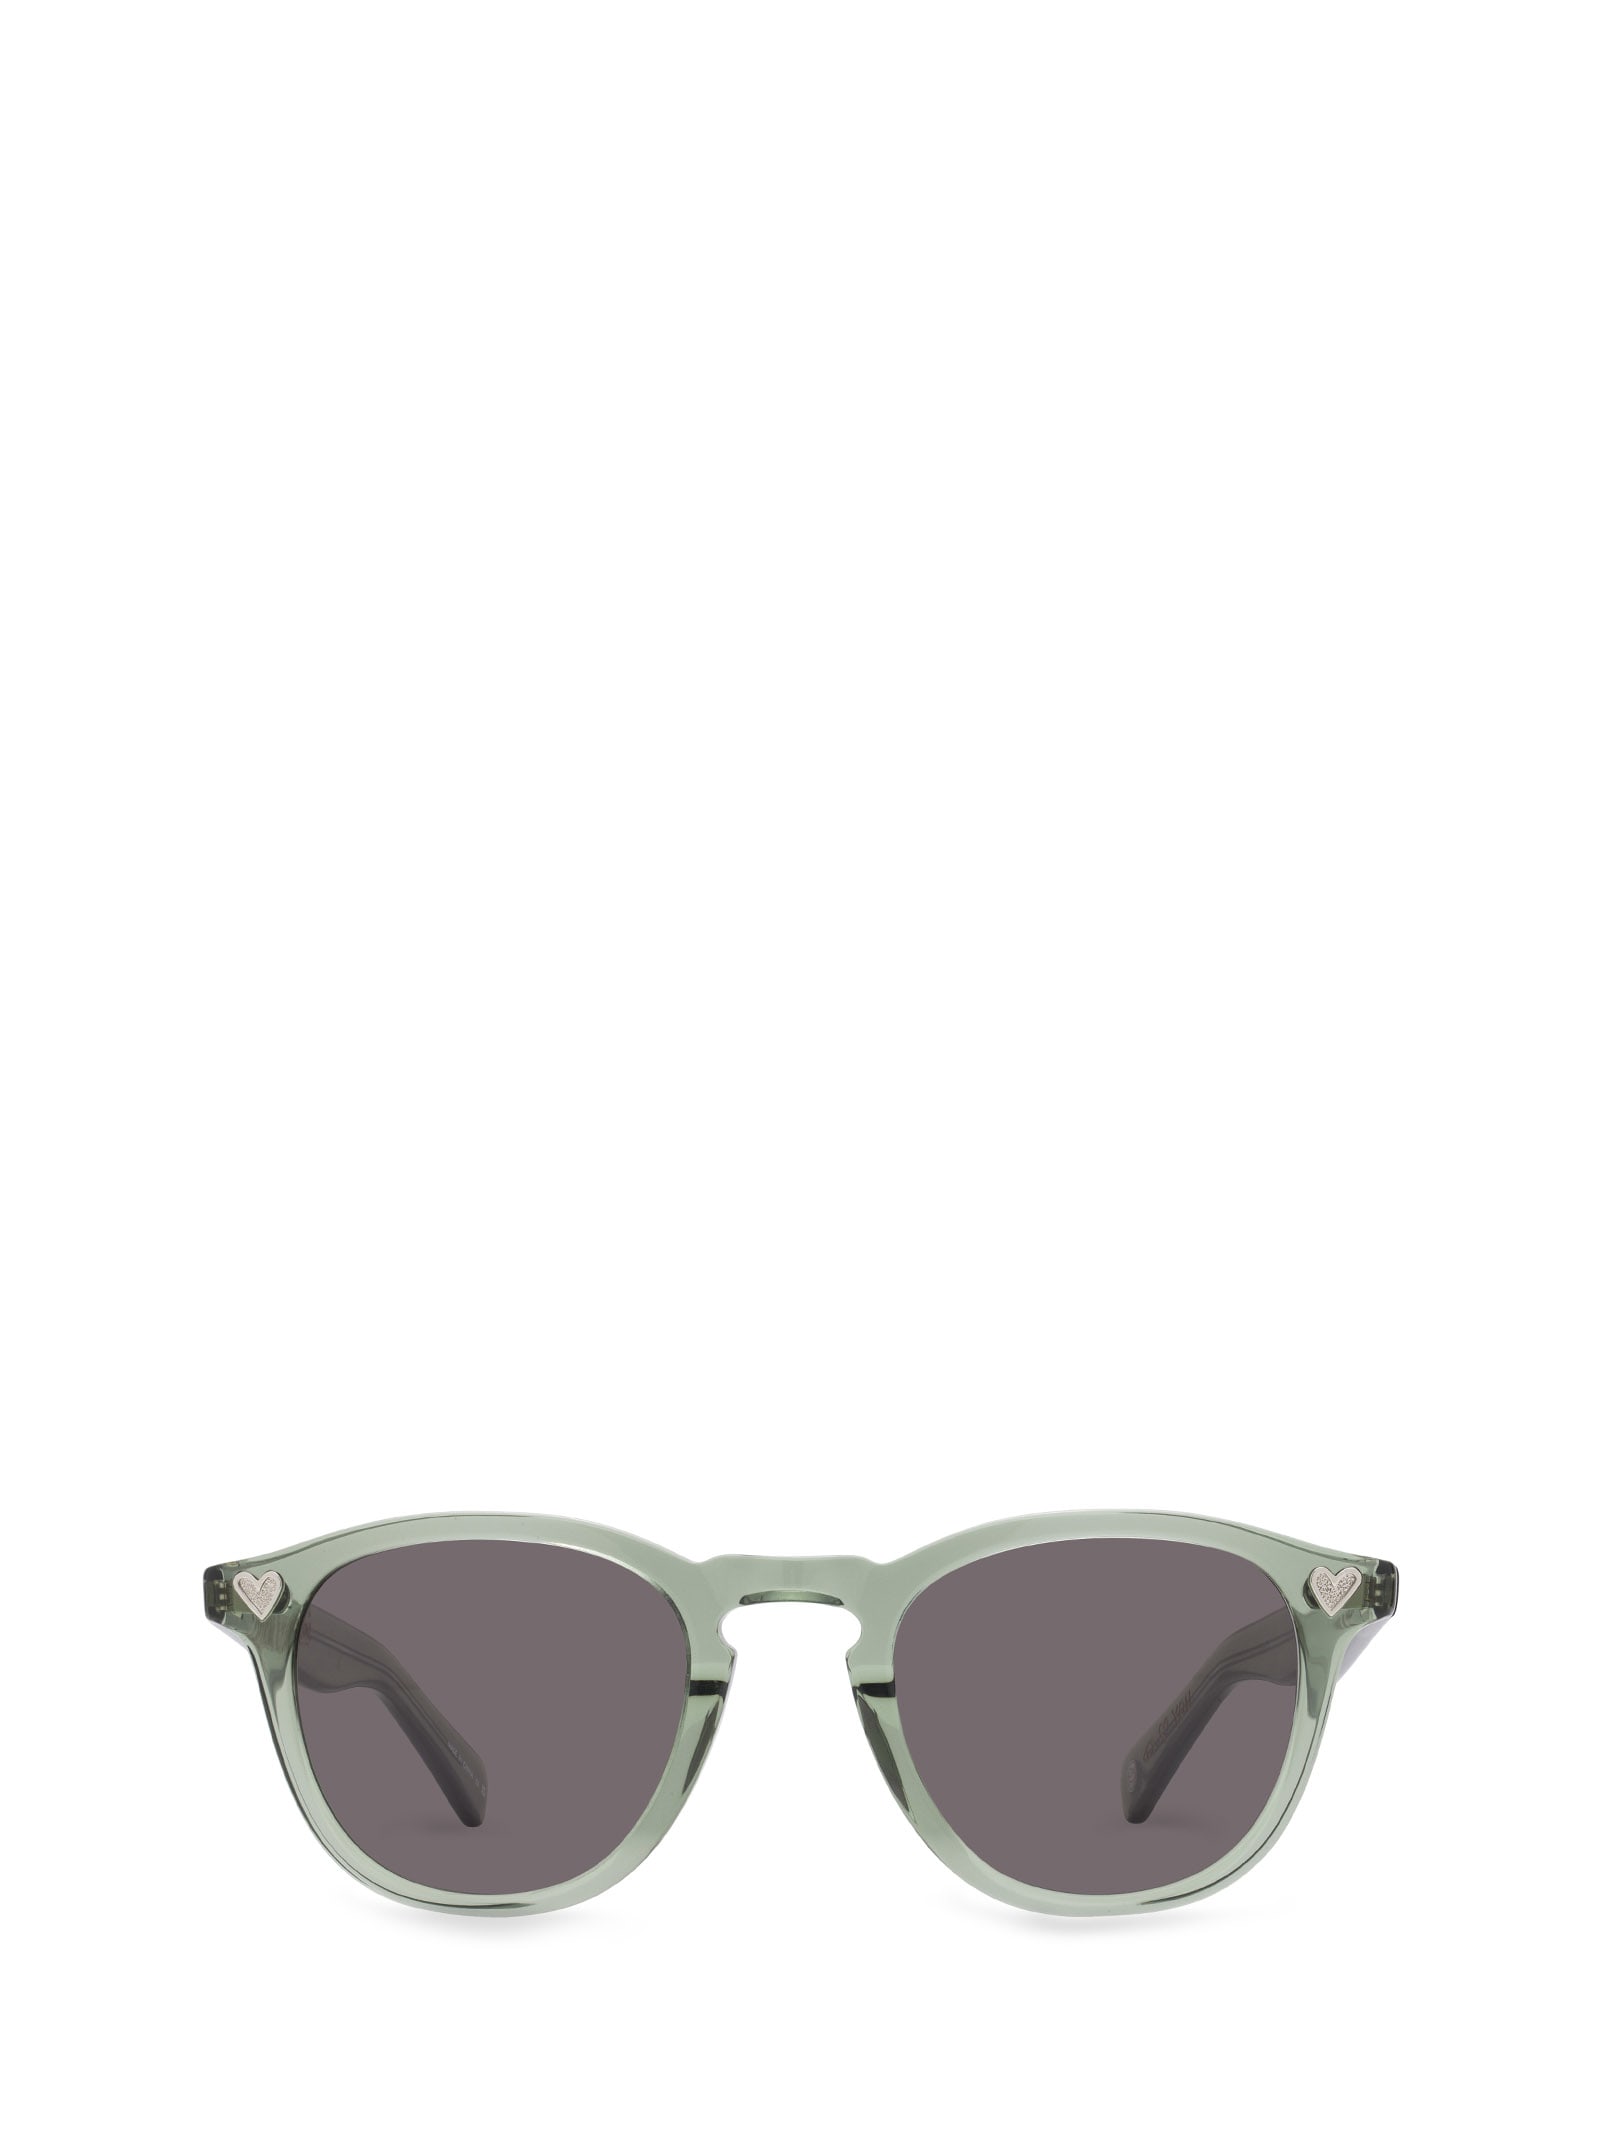 Glco X Andre Saraiva Sun Juniper/g15 Sunglasses